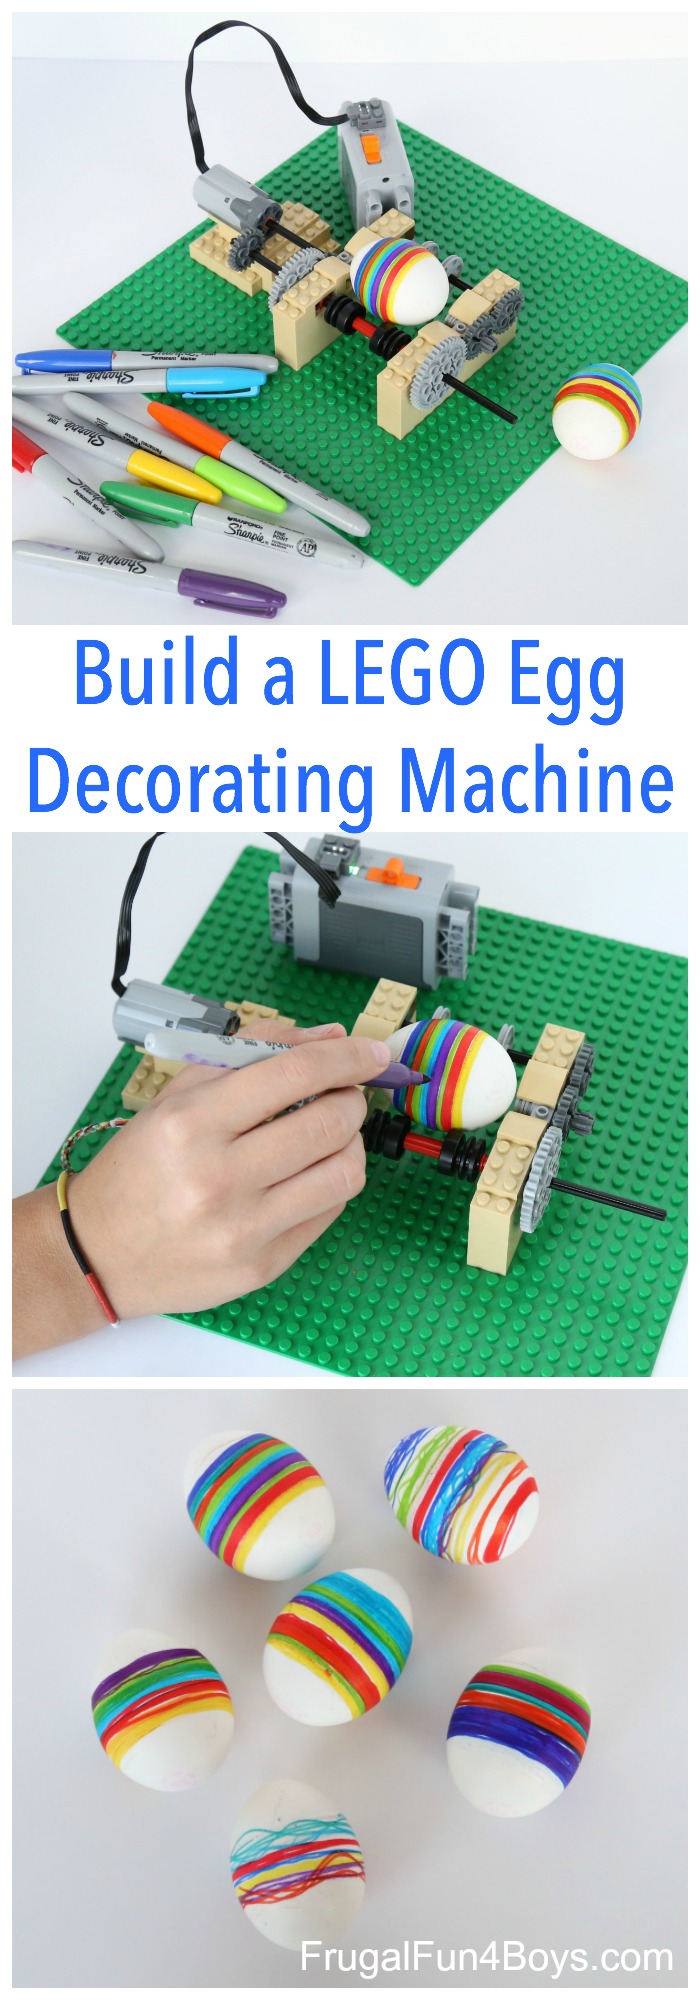 Build a LEGO Egg Decorating Machine